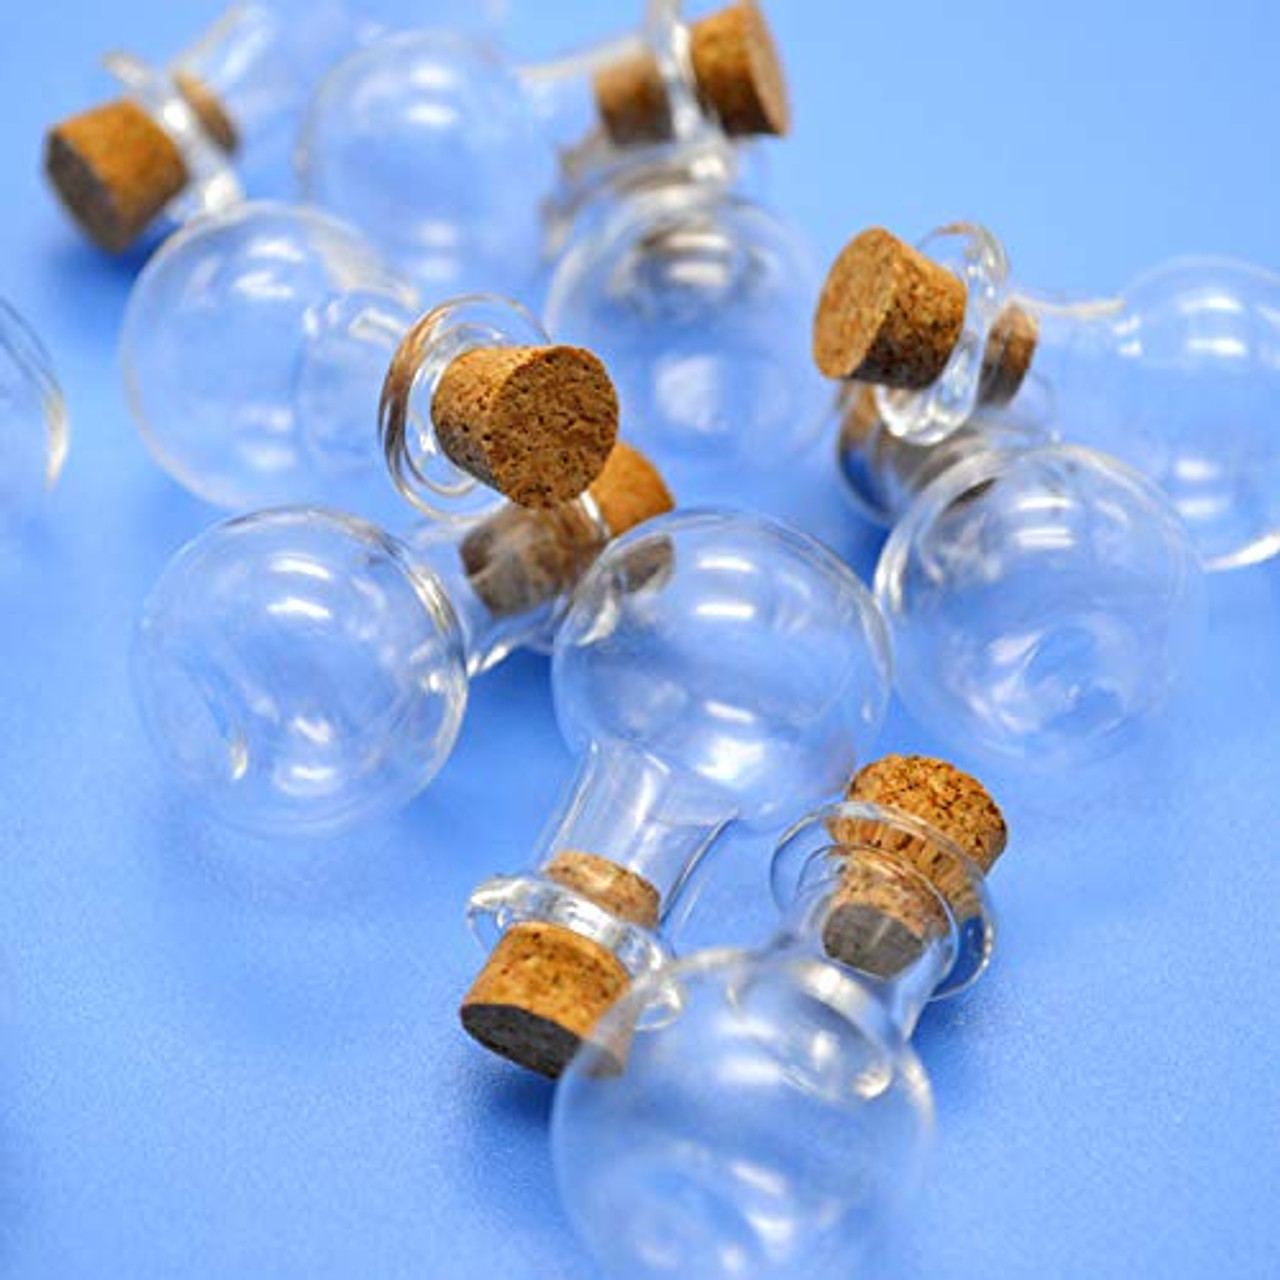 20PCS Tiny Glass Jars Glass Sample Jars Small Glass Jars Small Glass Vials